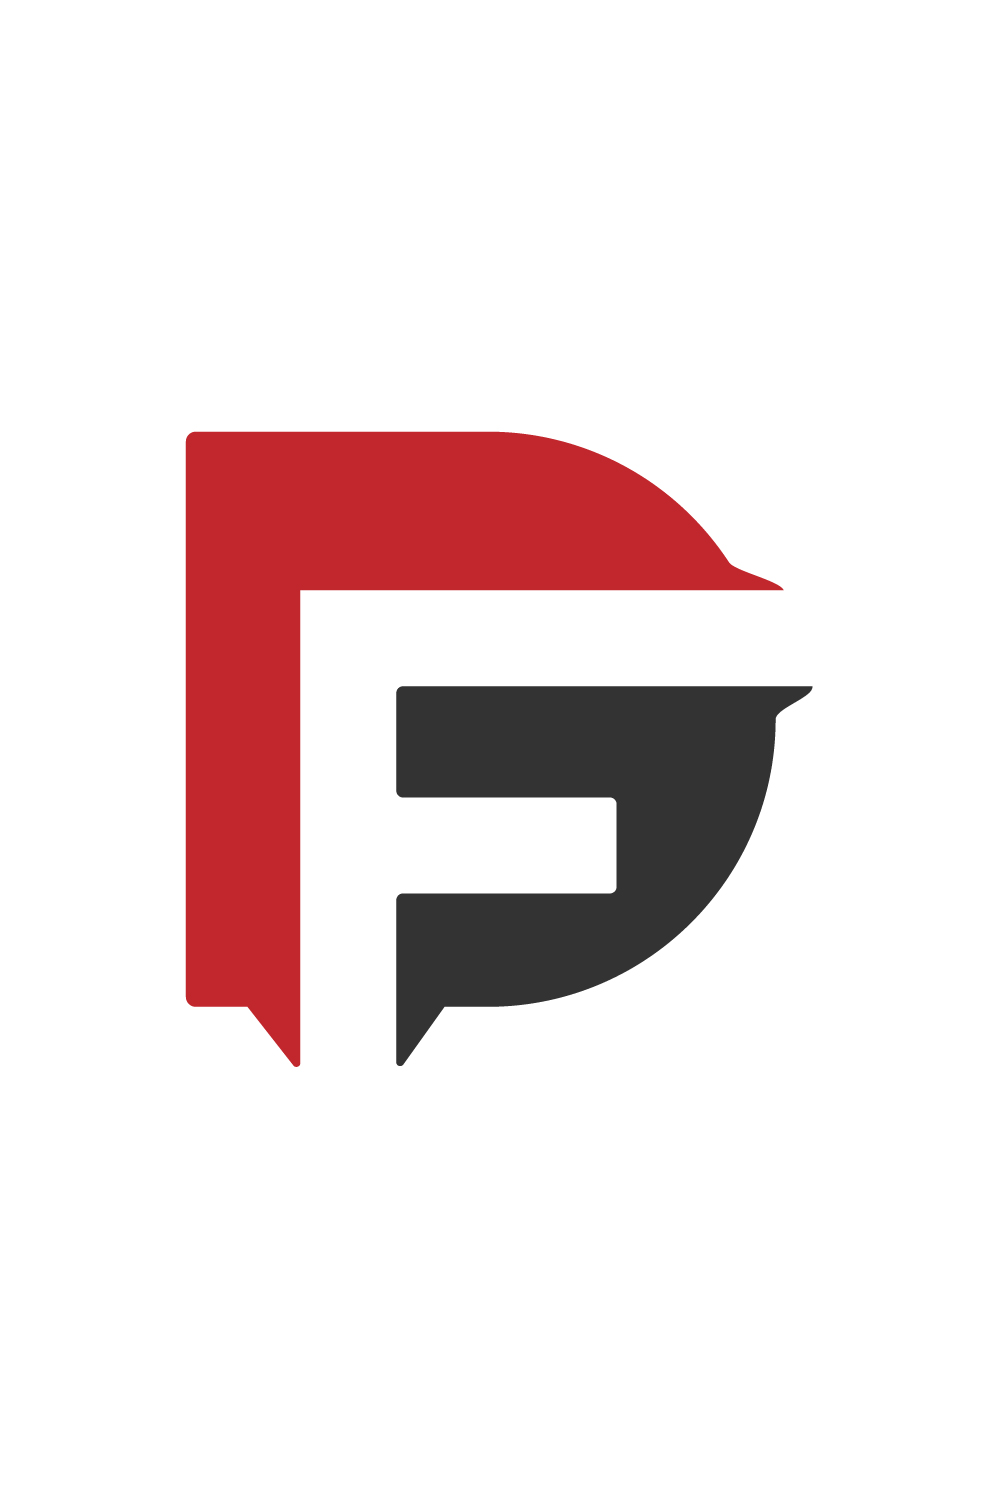 DF logo Design pinterest preview image.